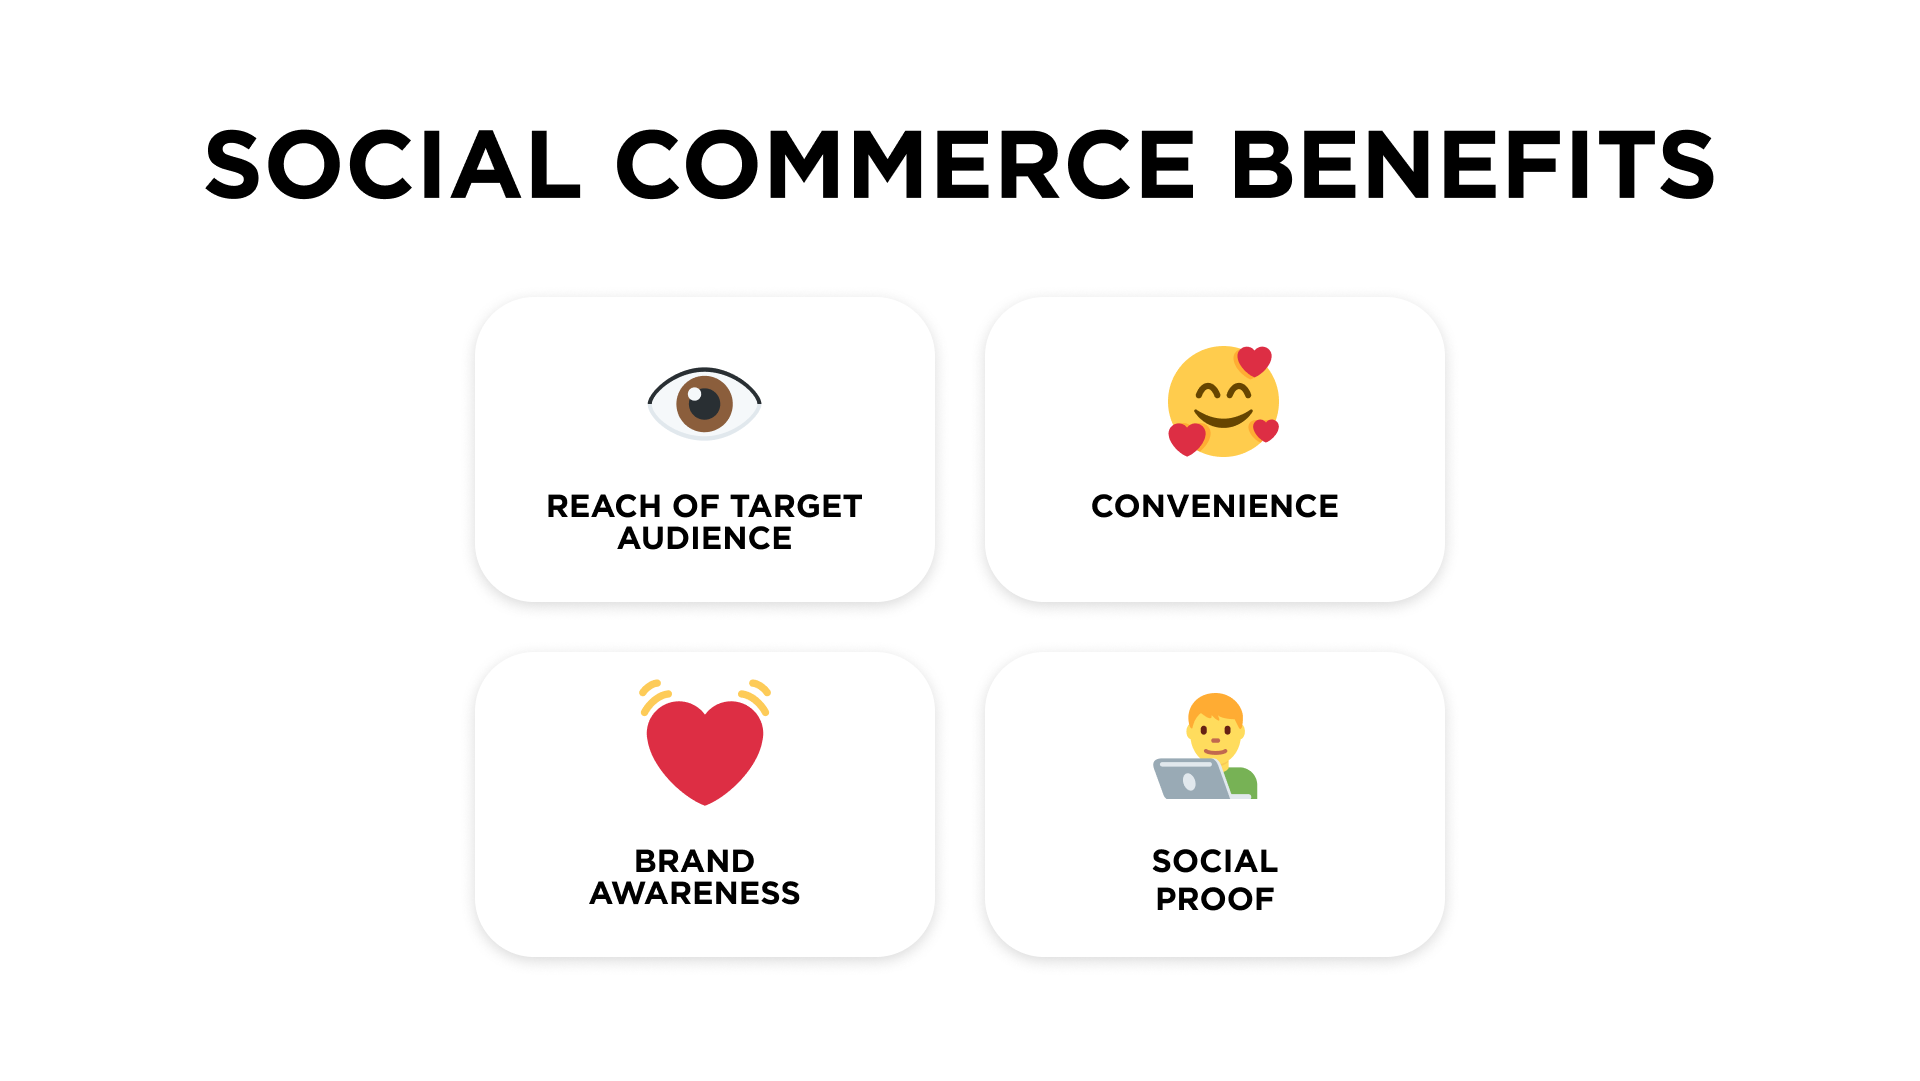 Social commerce benefits